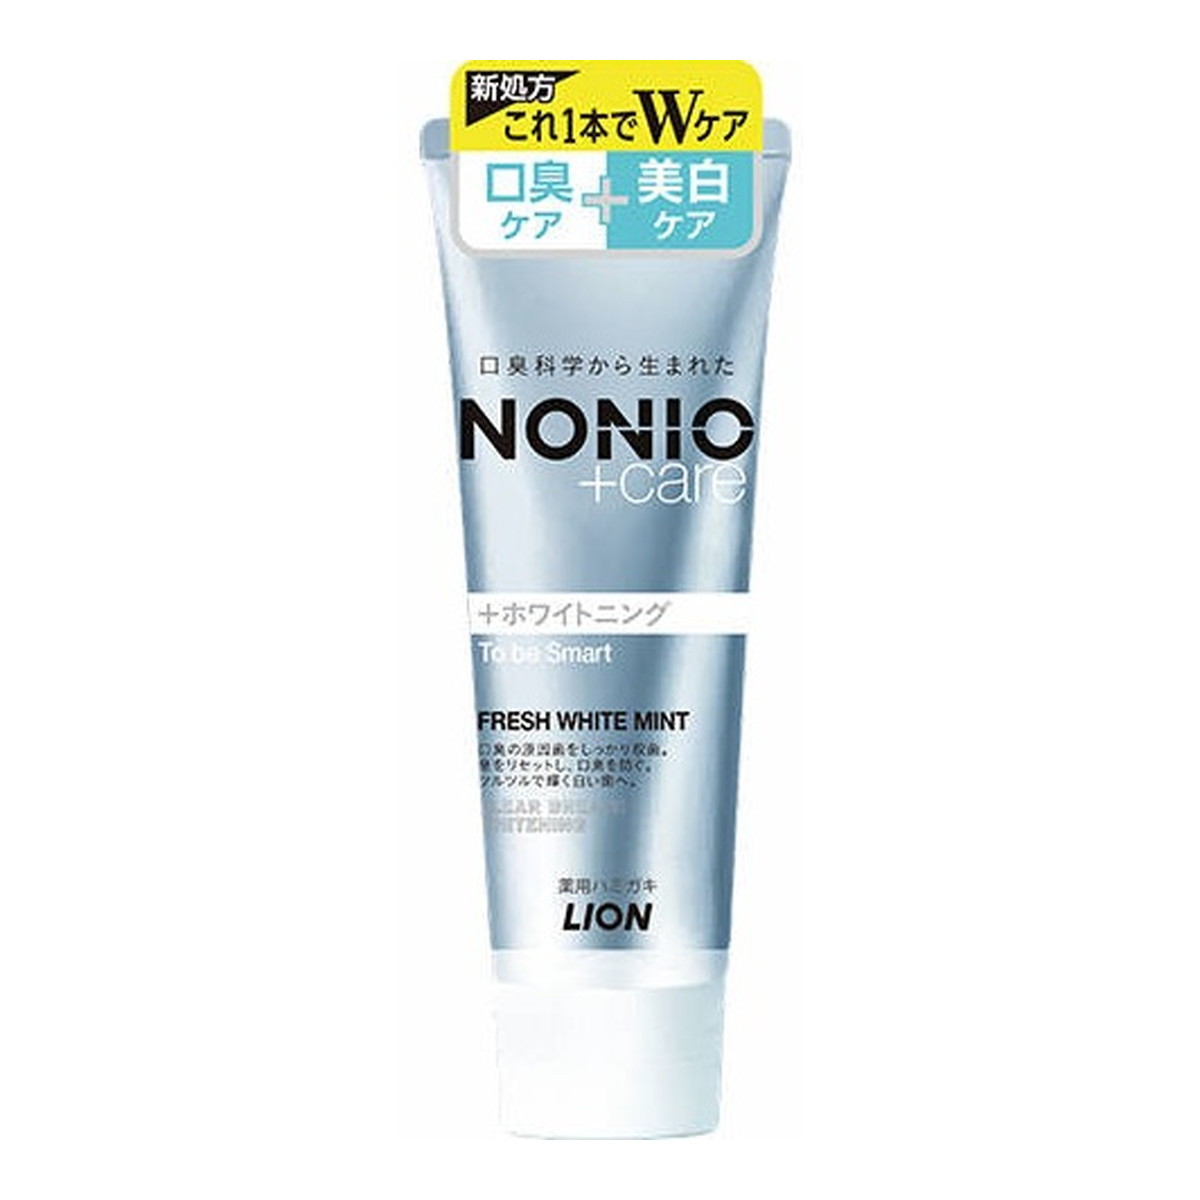 NONIO プラスホワイトニング ハミガキ 130g×1本の商品画像